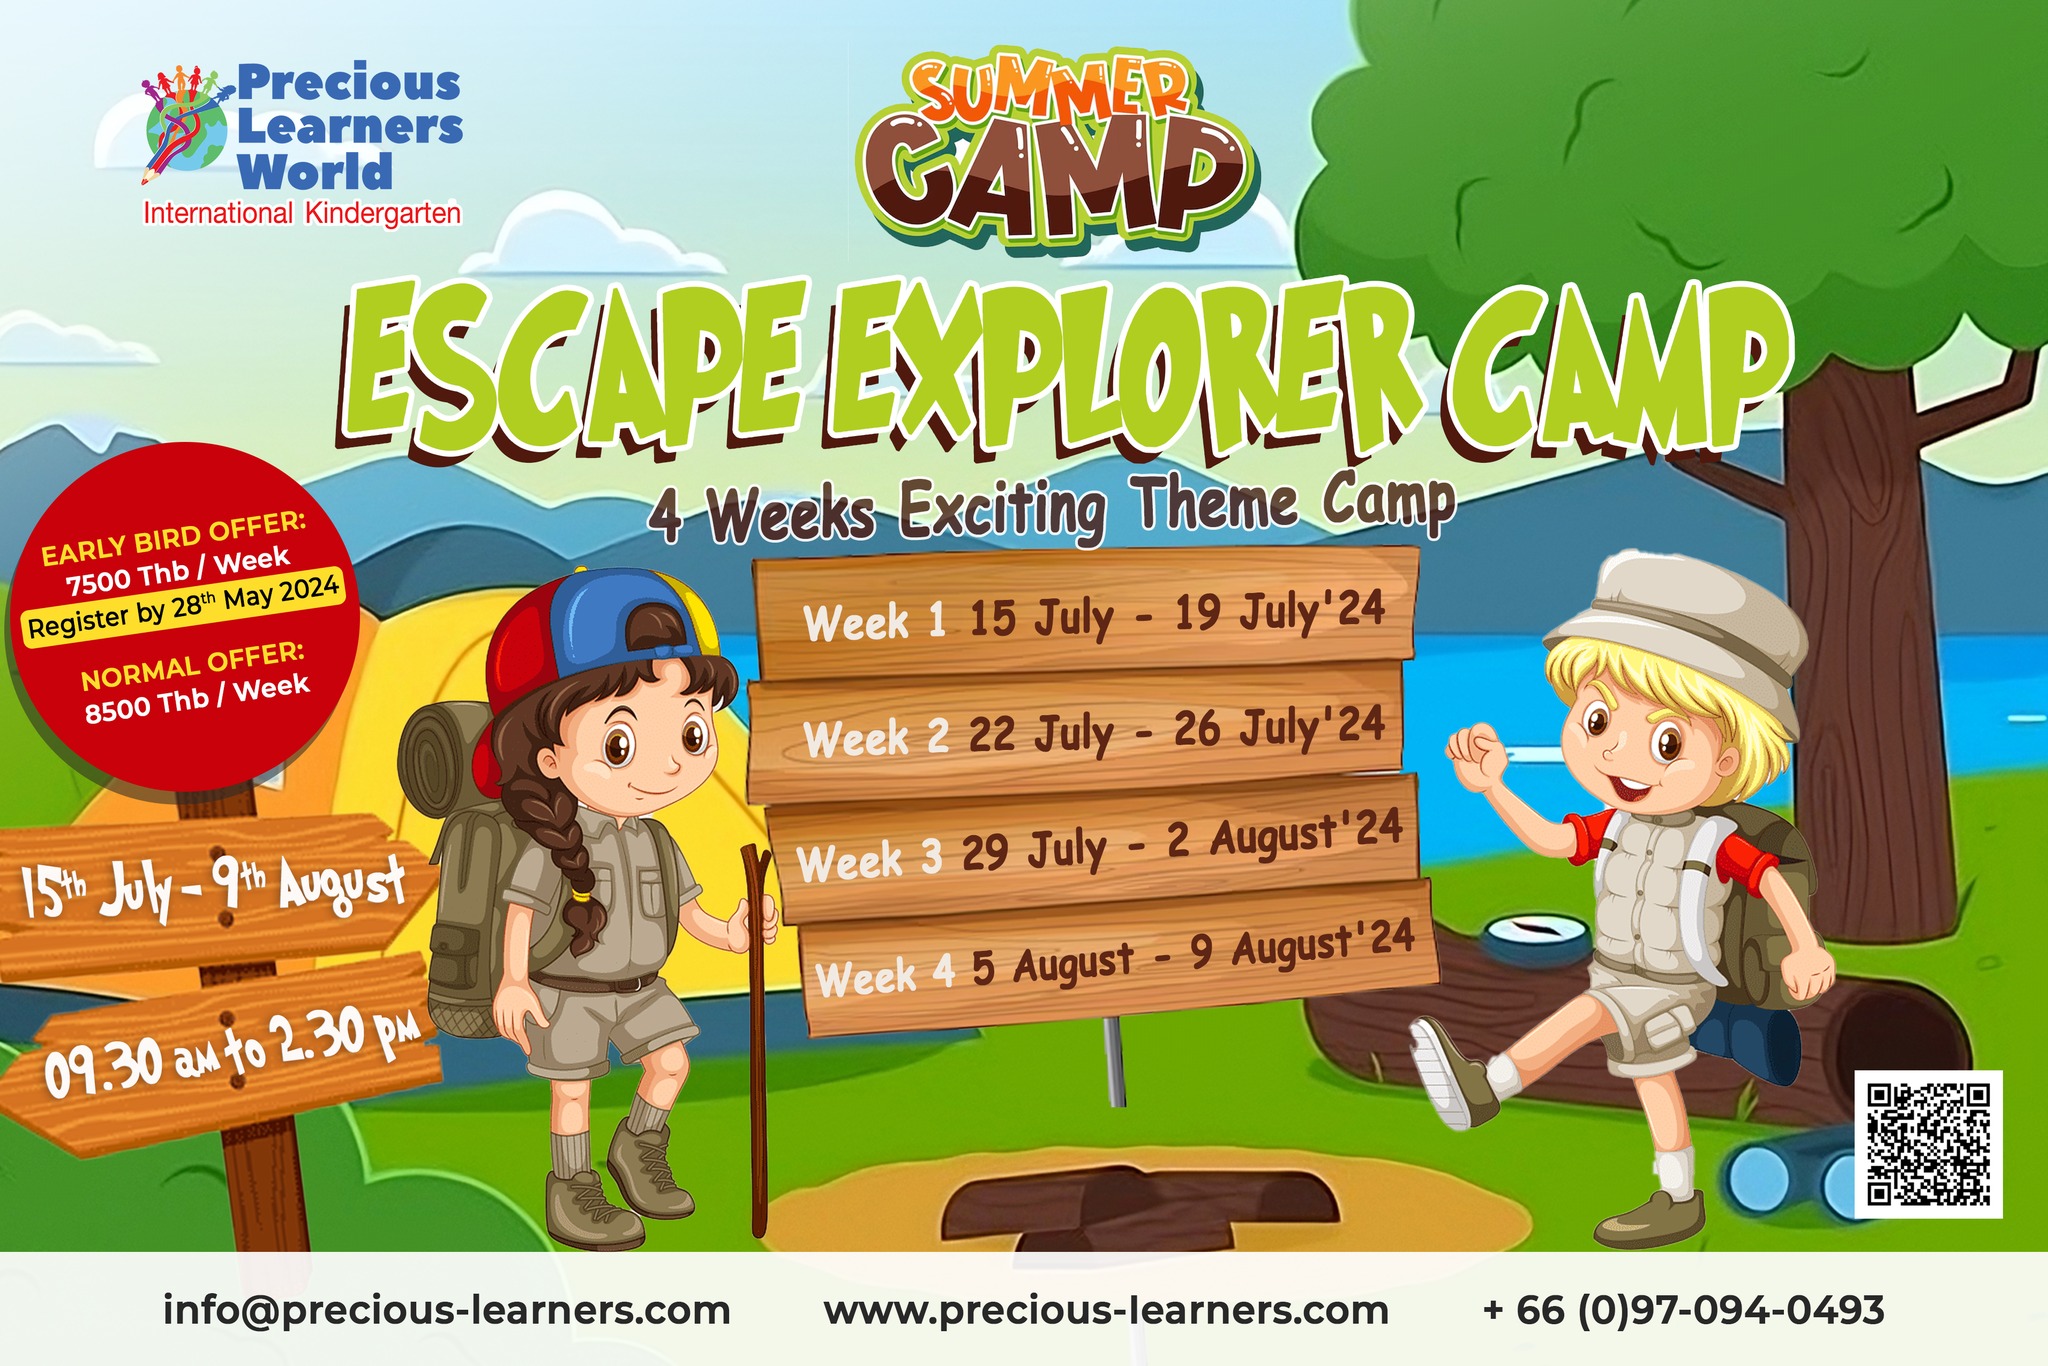 Precious Learners World - Escape Explorer Camp Cover